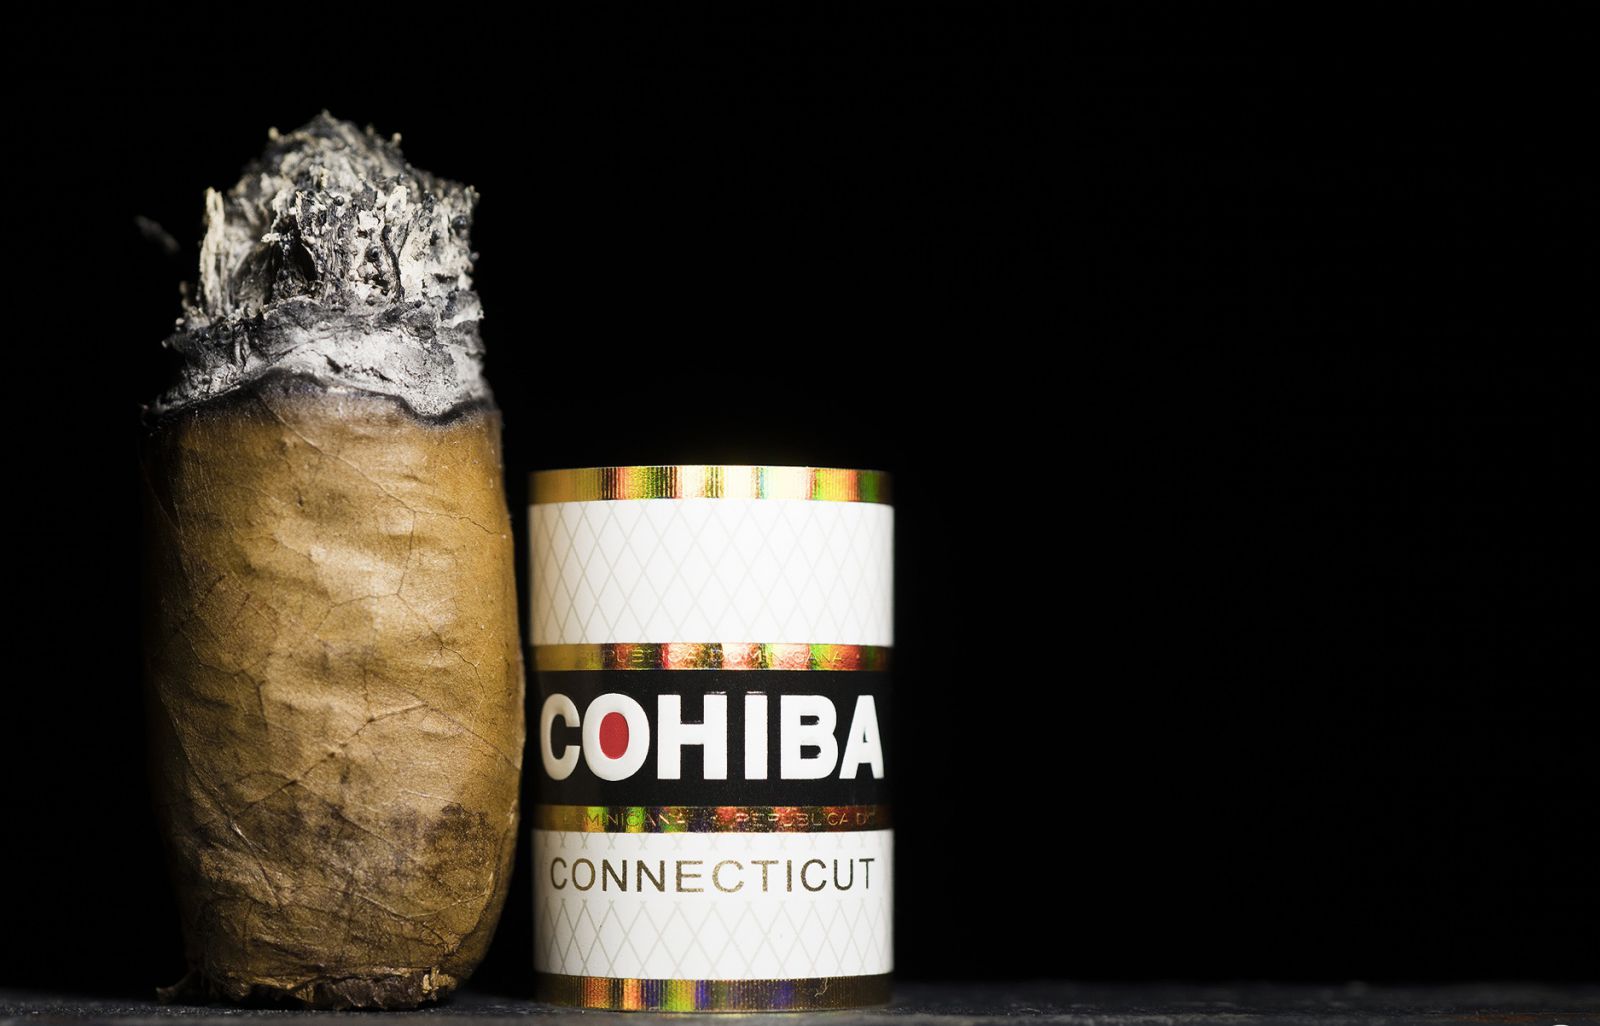 Xì gà Cohiba Connecticut Toro mua tại sài gòn